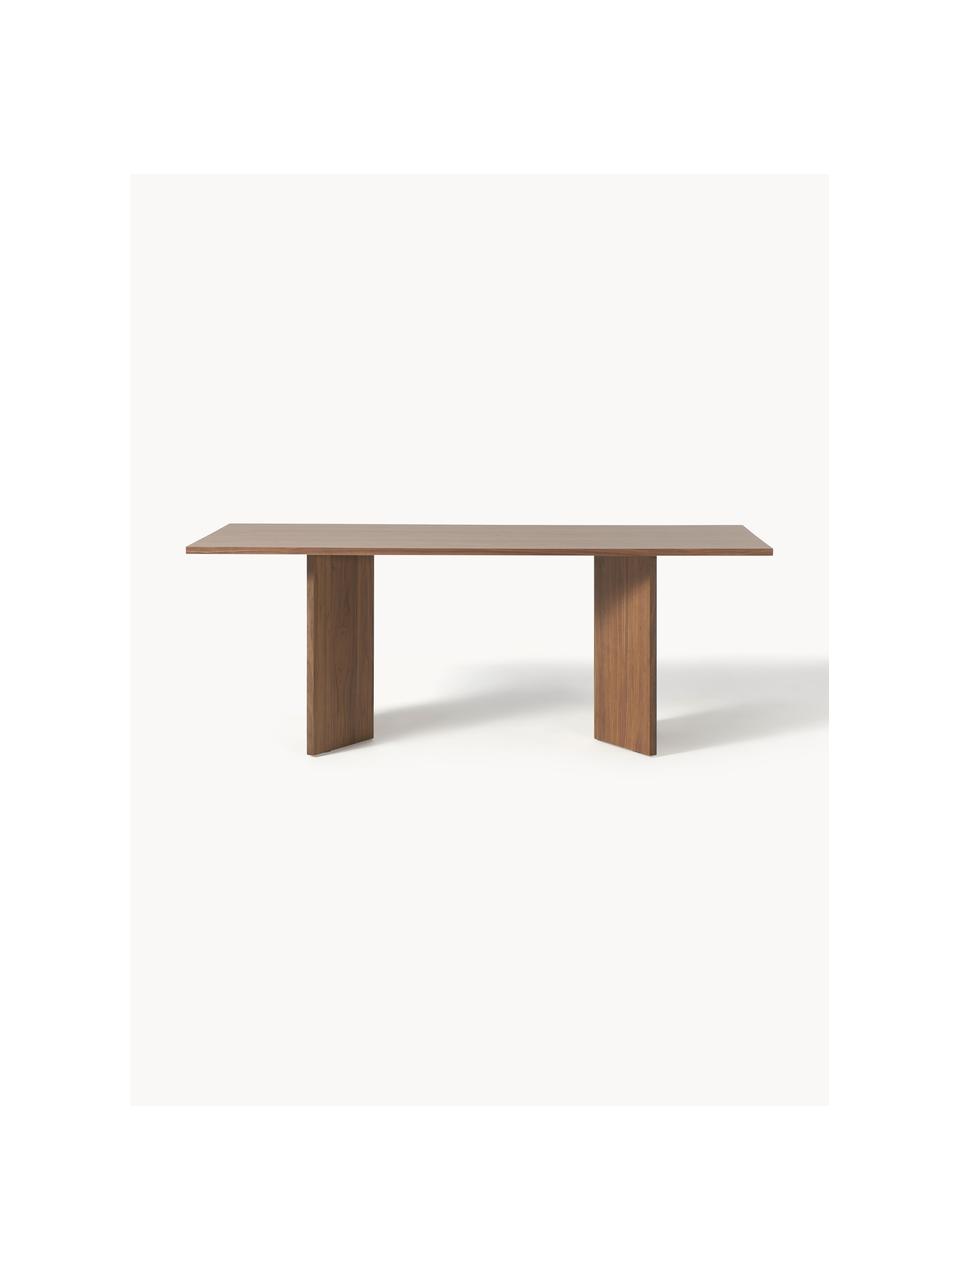 Drevený jedálenský stôl Toni, 200 x 90 cm, MDF-doska strednej hustoty s orechovou dyhou, lakované, s FSC certifikátom, Orechové drevo, Š 200 x D 90 cm